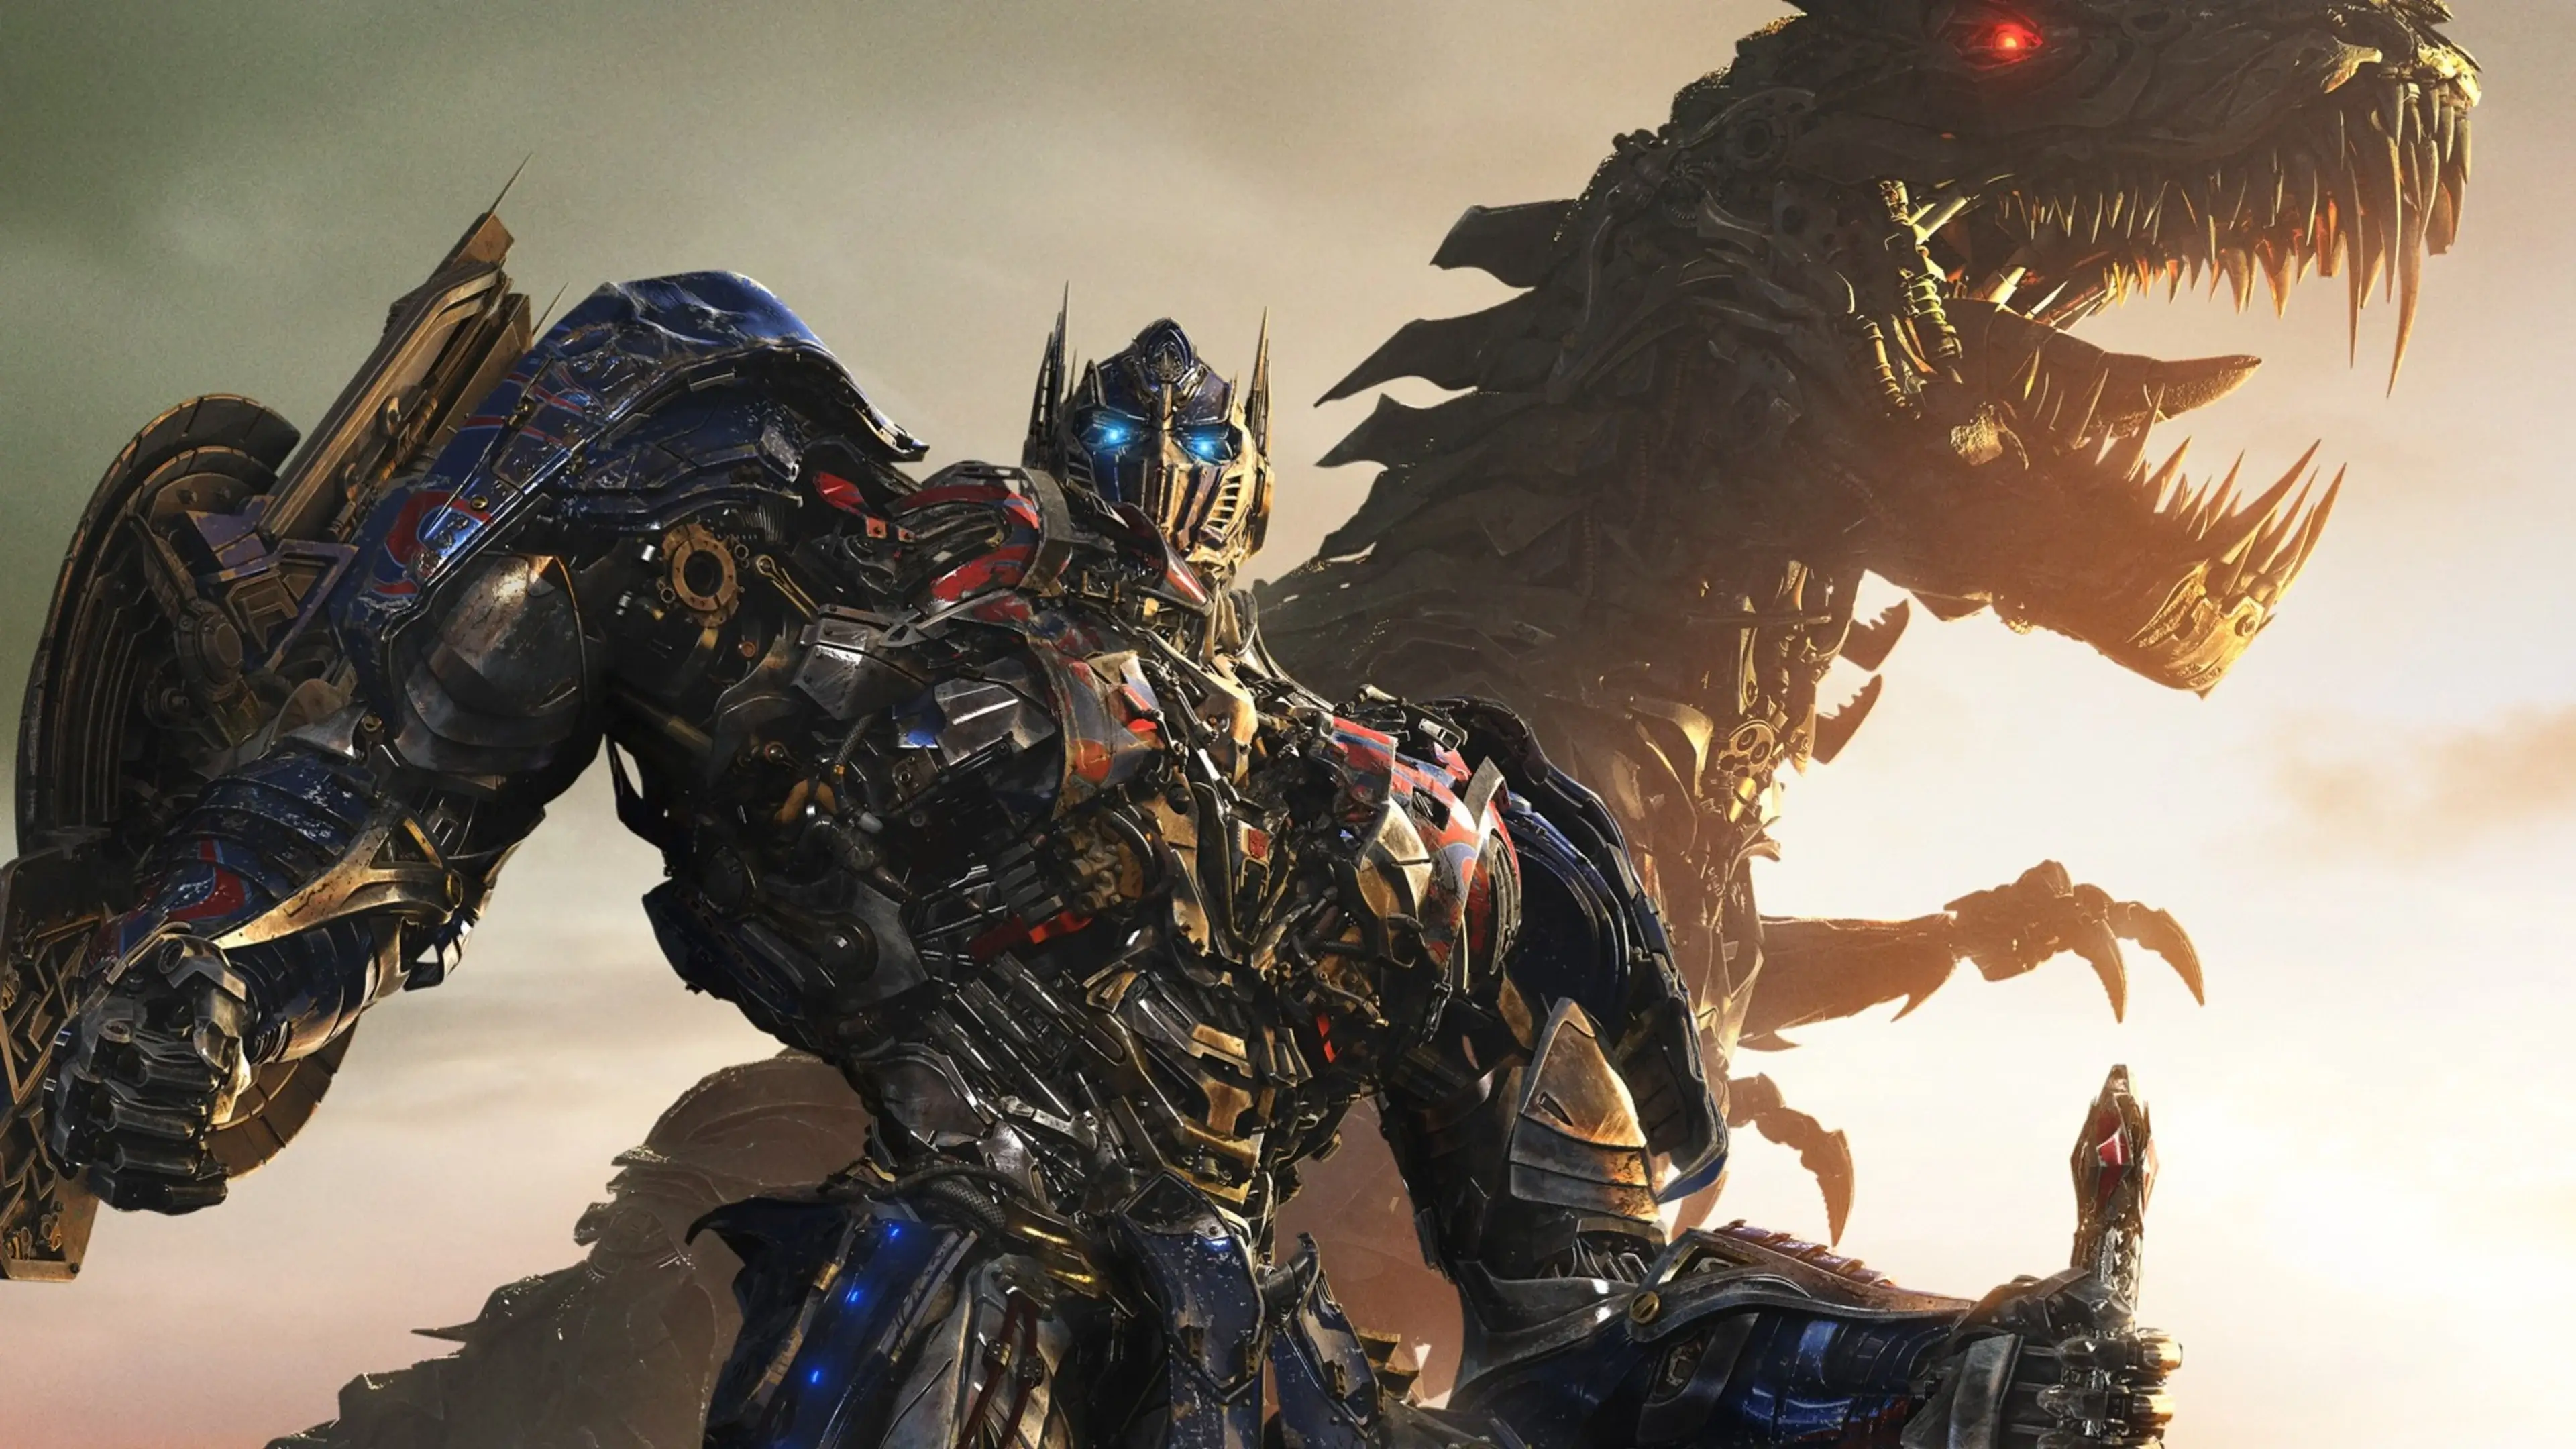 Transformers Age of Extinction 4K 2014 big poster